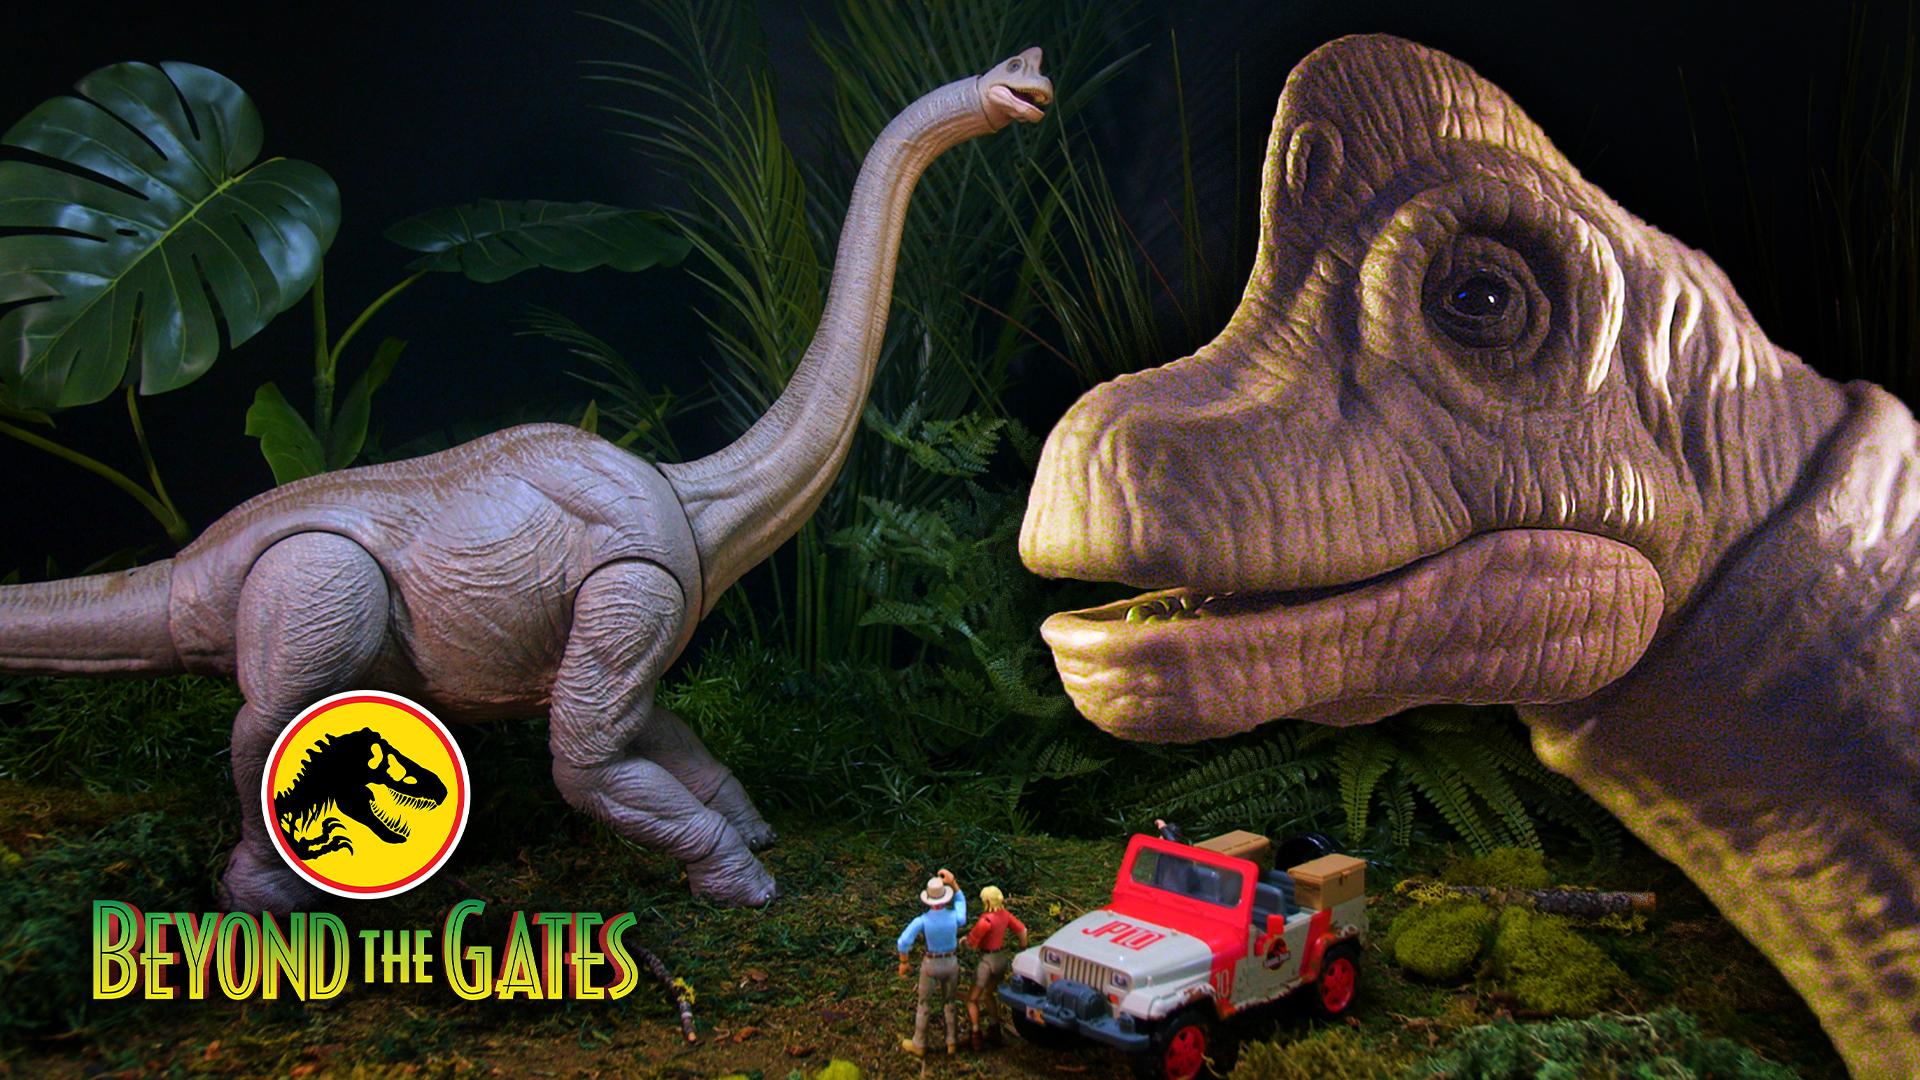 Mattel’s New Jurassic Park BRACHIOSAURUS is Unveiled in Beyond The Gates!